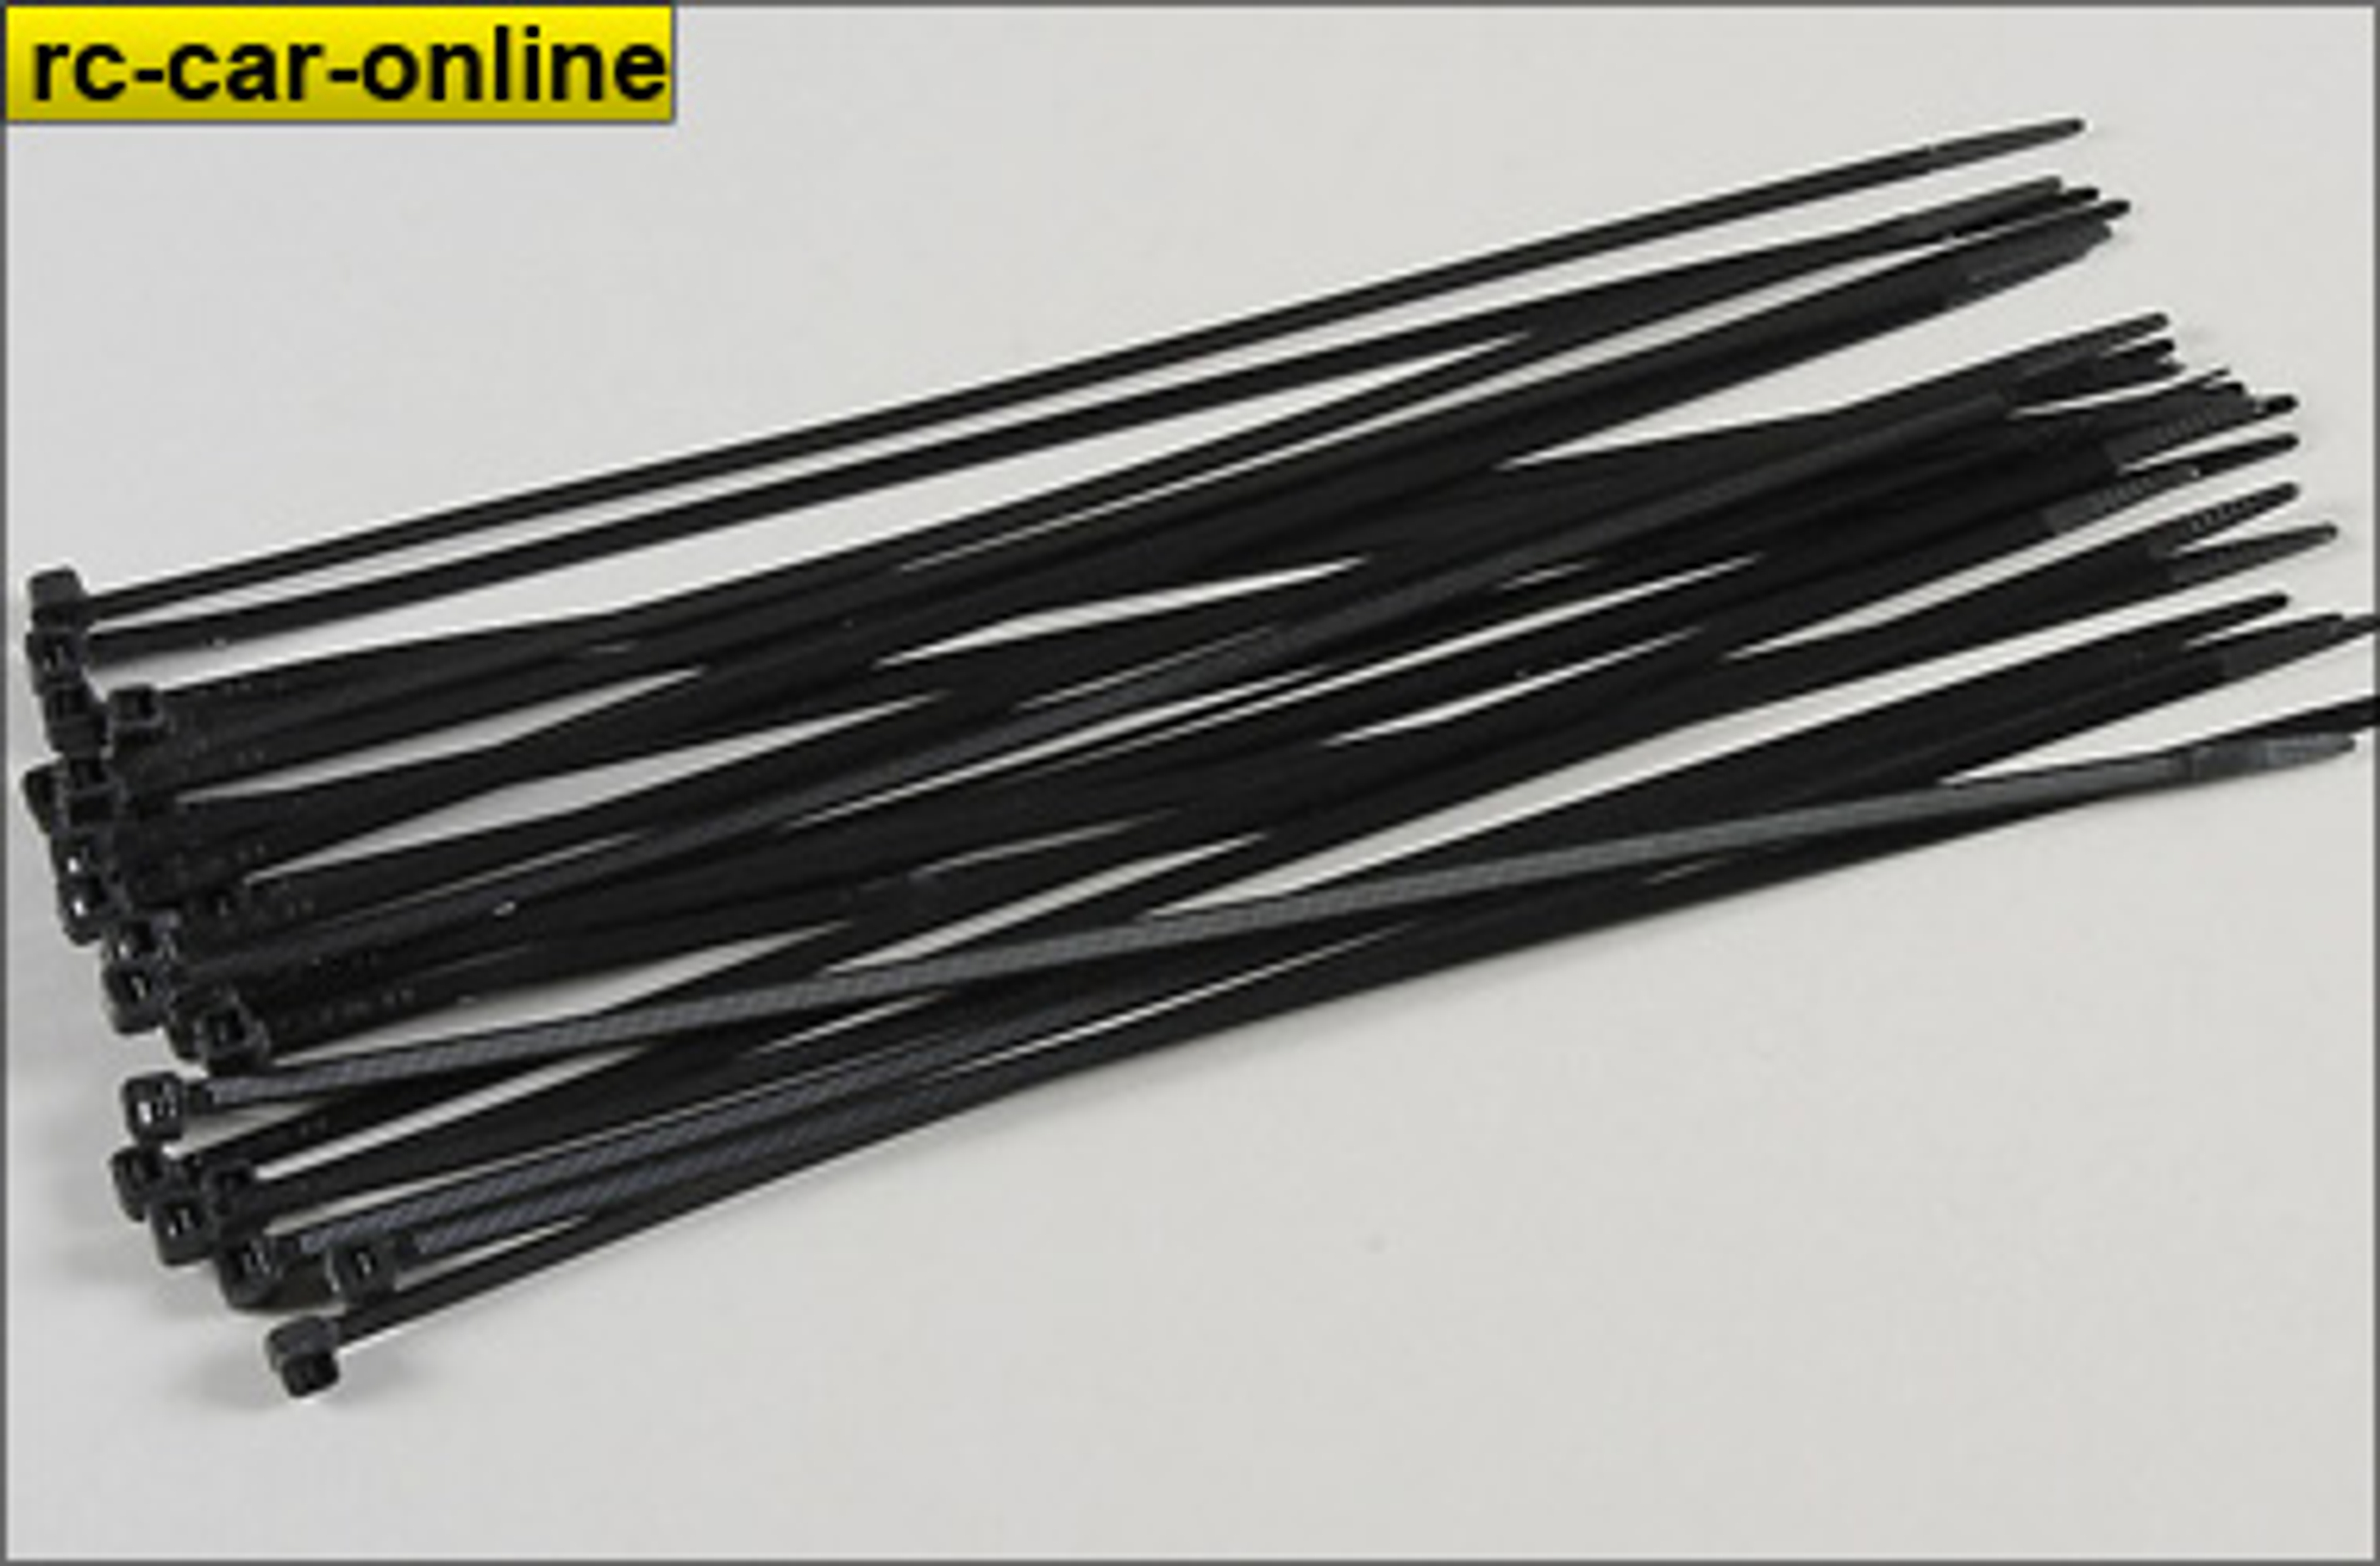 6565/29 FG Cable ties black 4,8x290mm - 25 pcs.